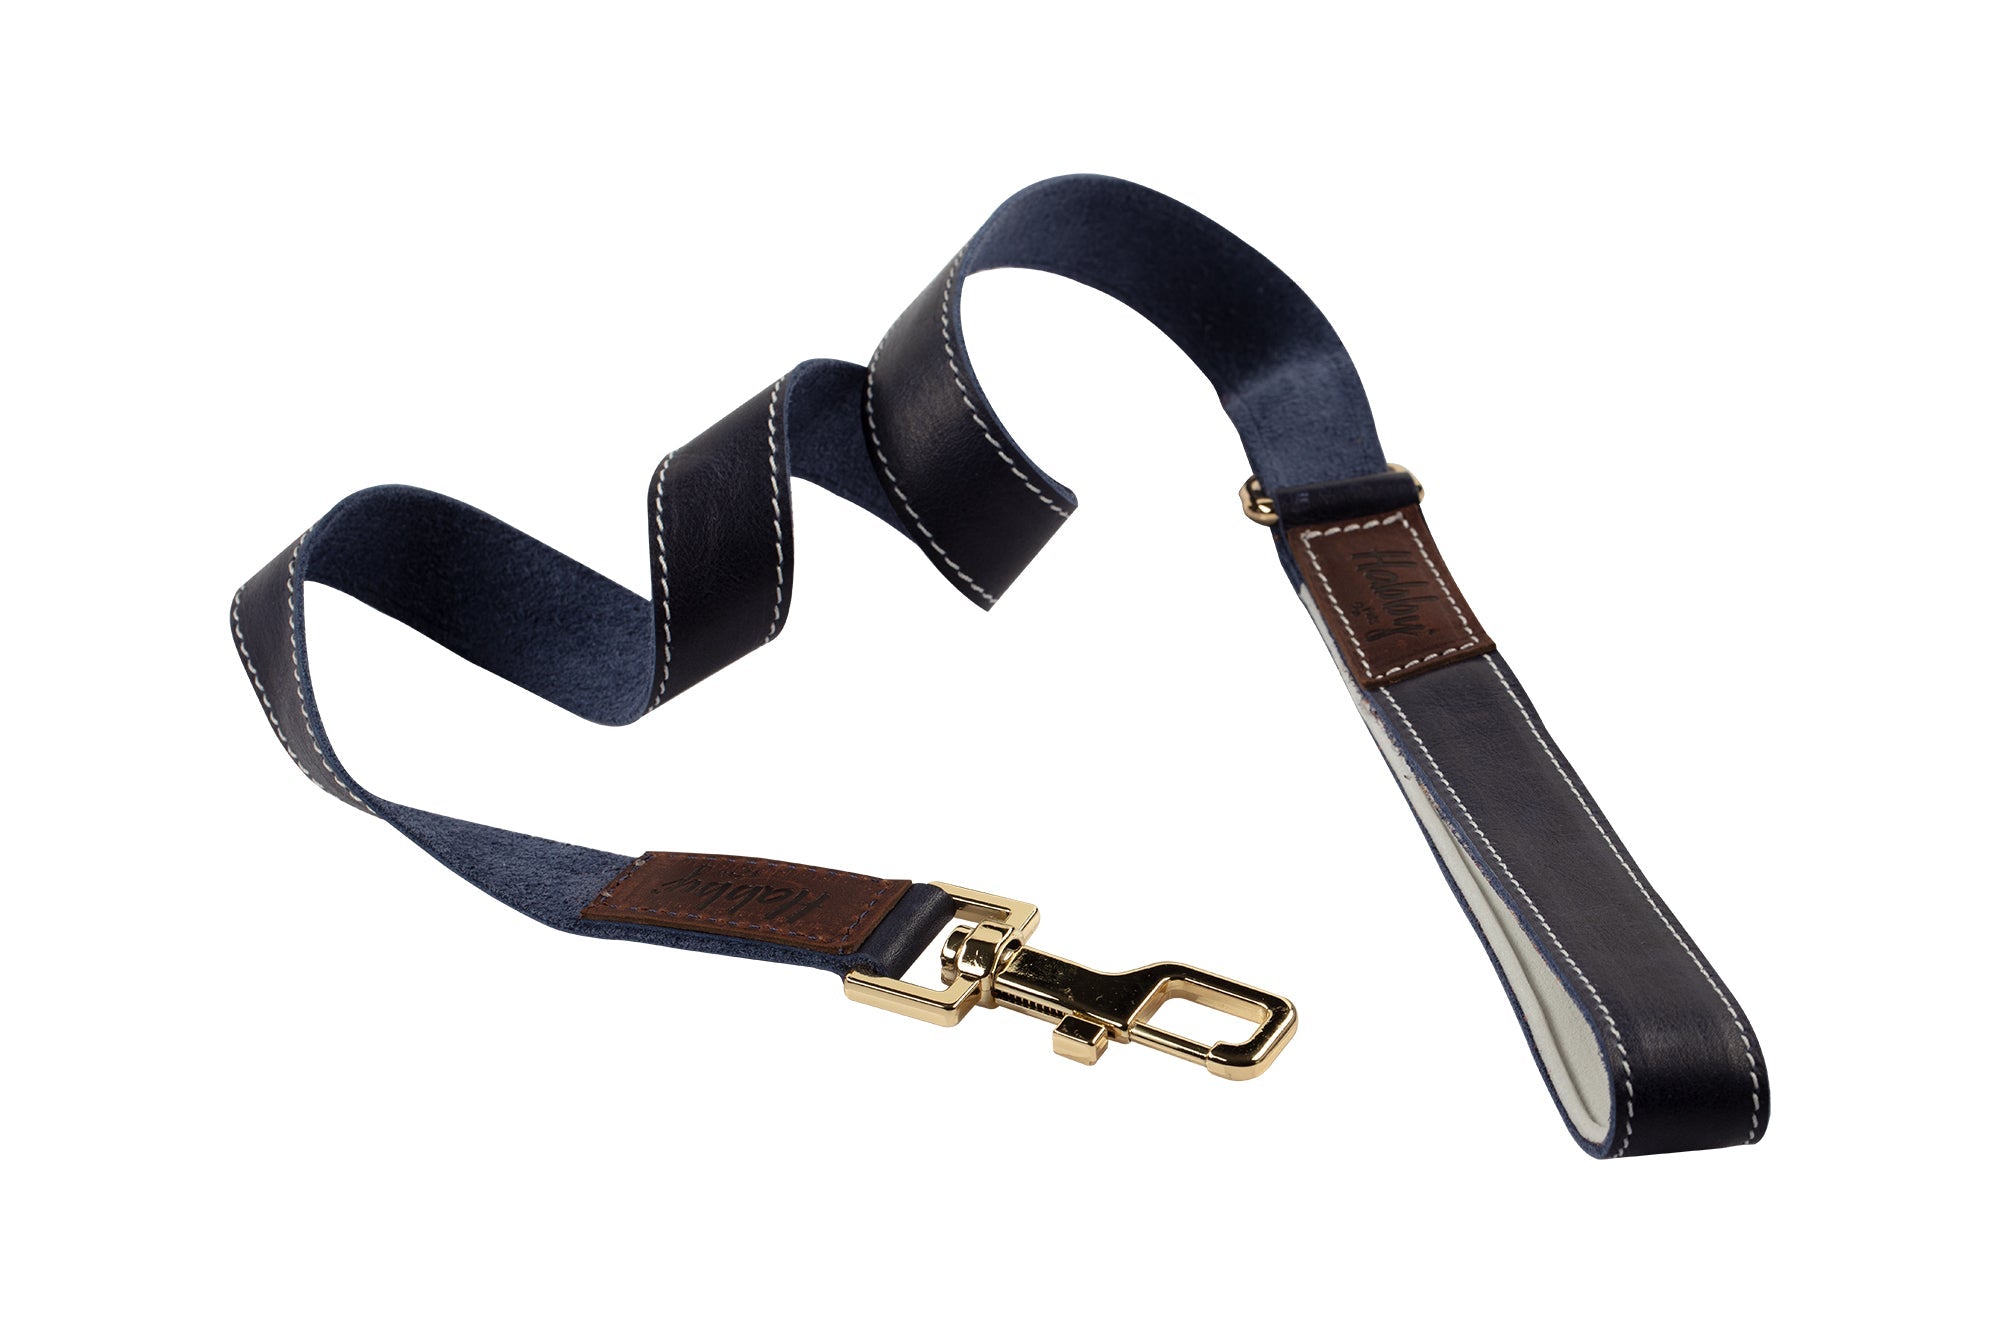 Genuine Leather Adjustable Strong Dog Collar